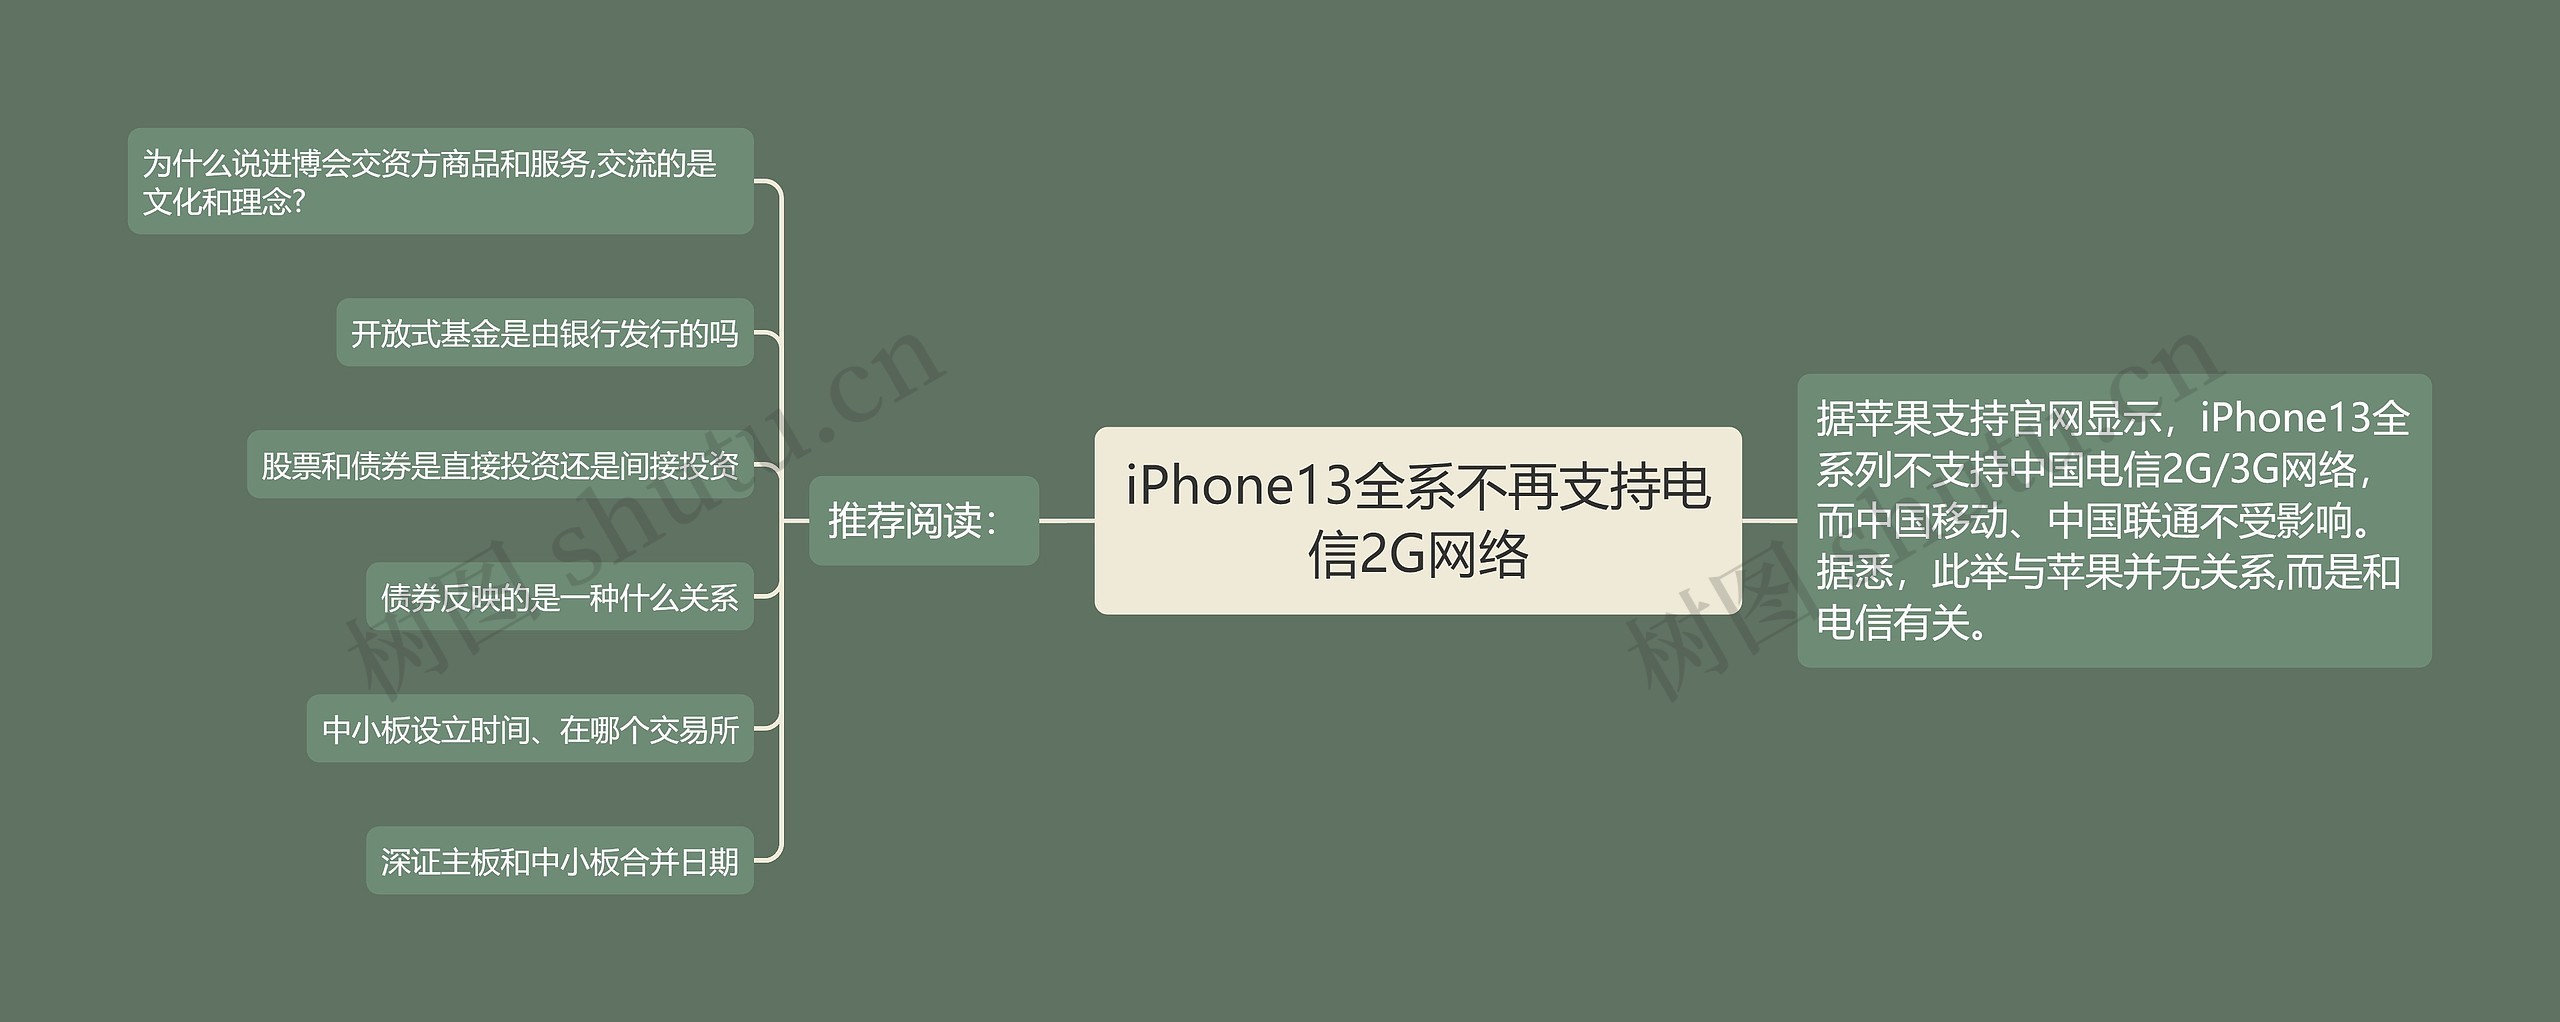 iPhone13全系不再支持电信2G网络思维导图